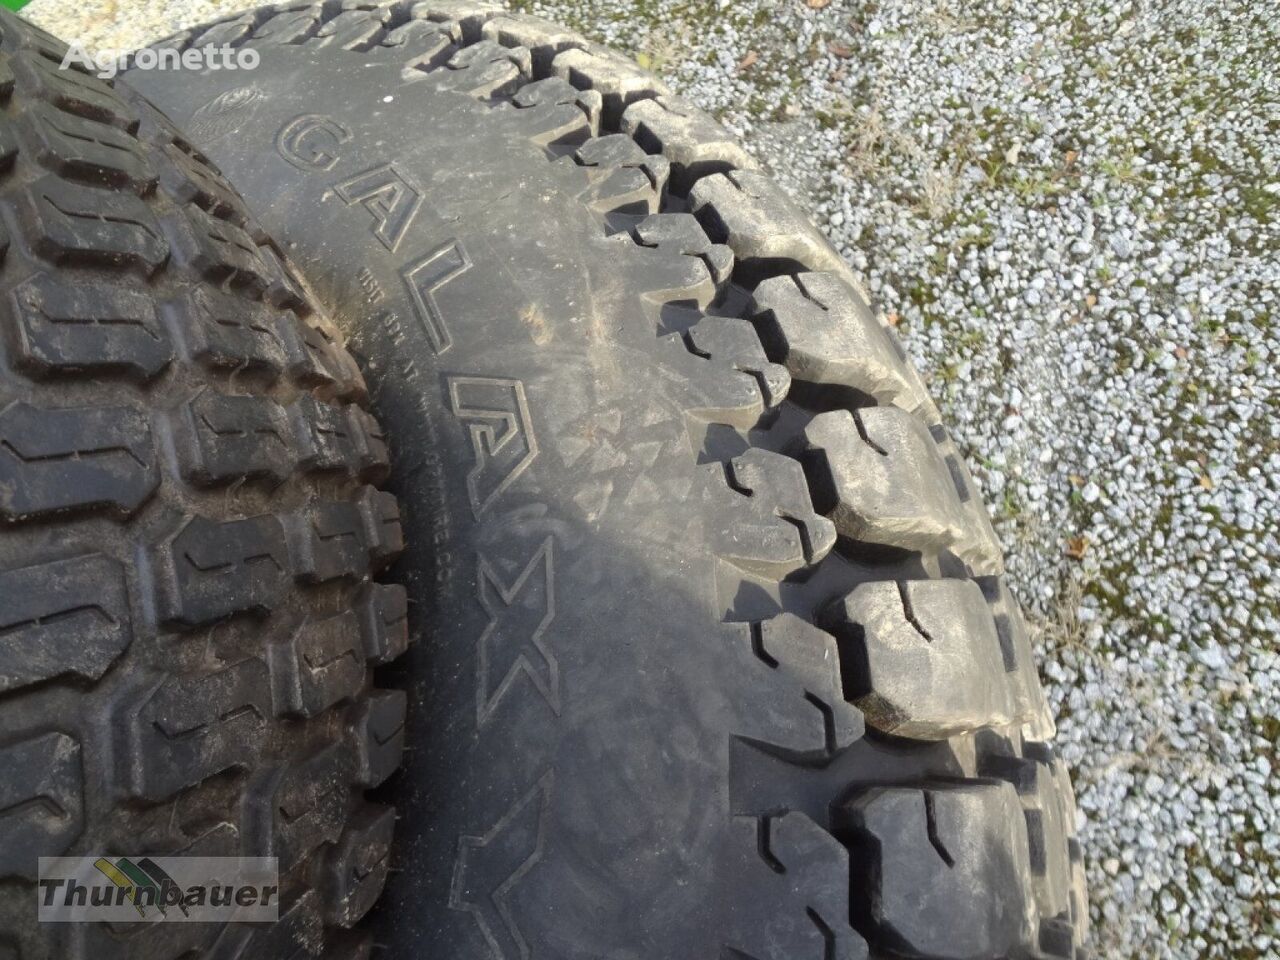 Galaxy 41 tractor tire